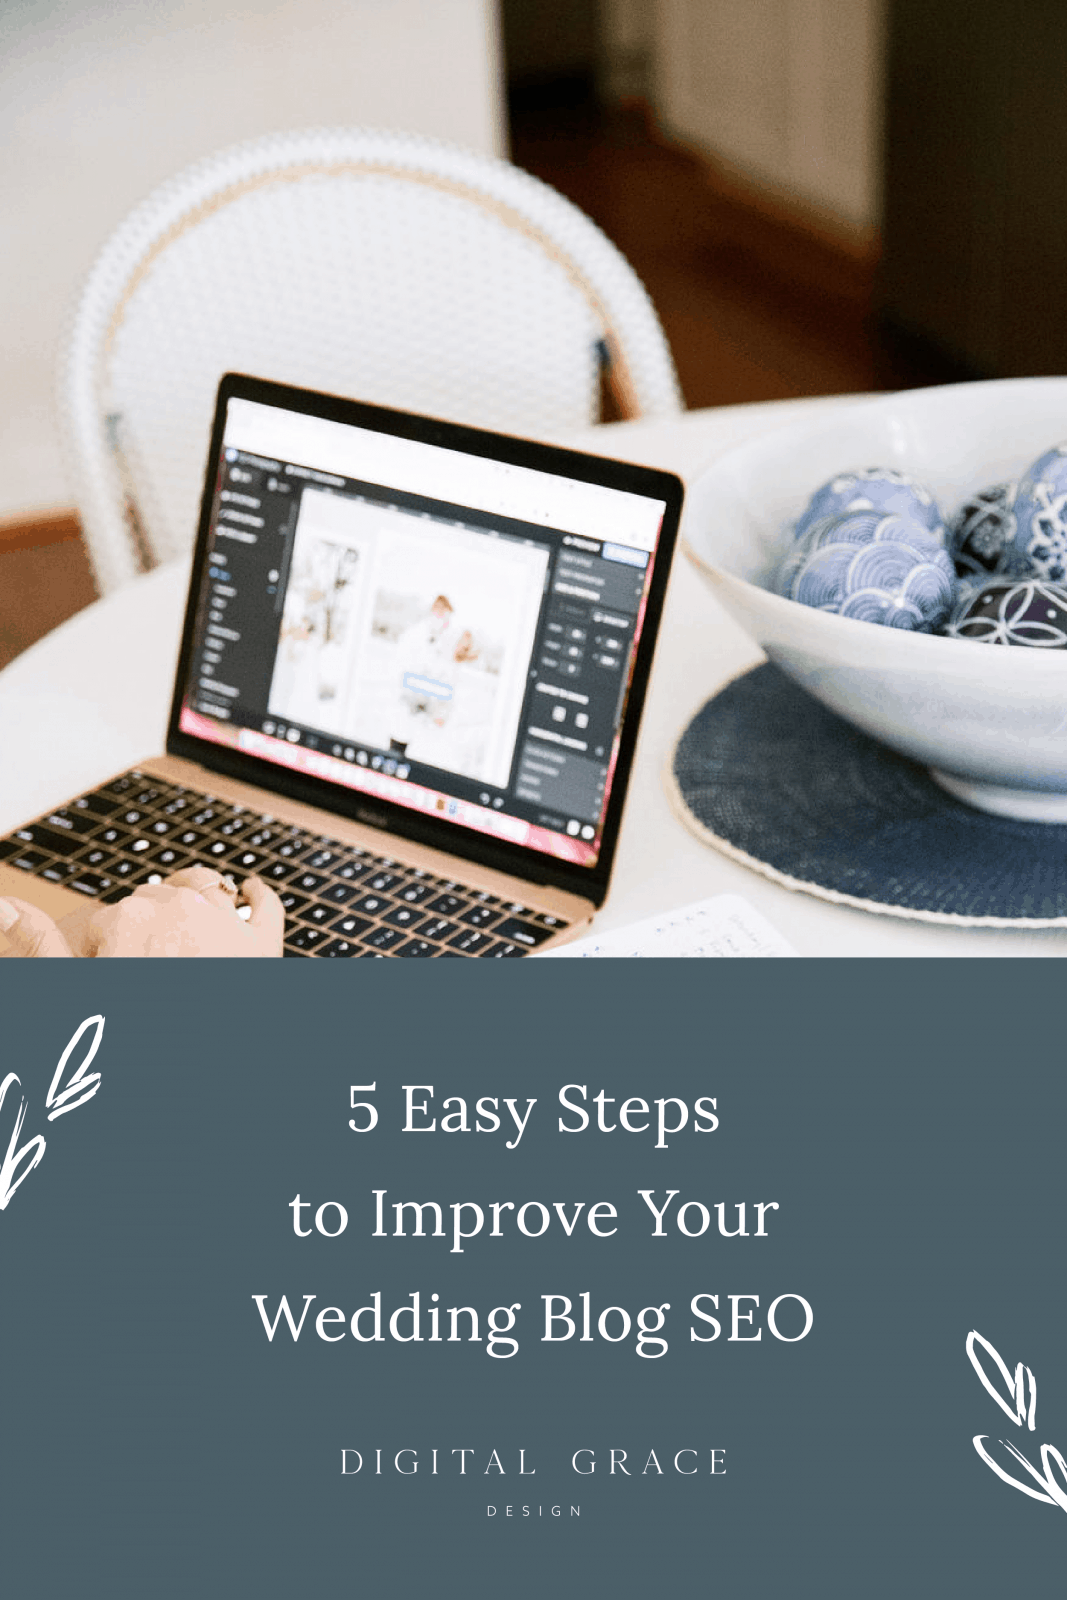 5 Easy Steps to Improve Your Wedding Blog SEO